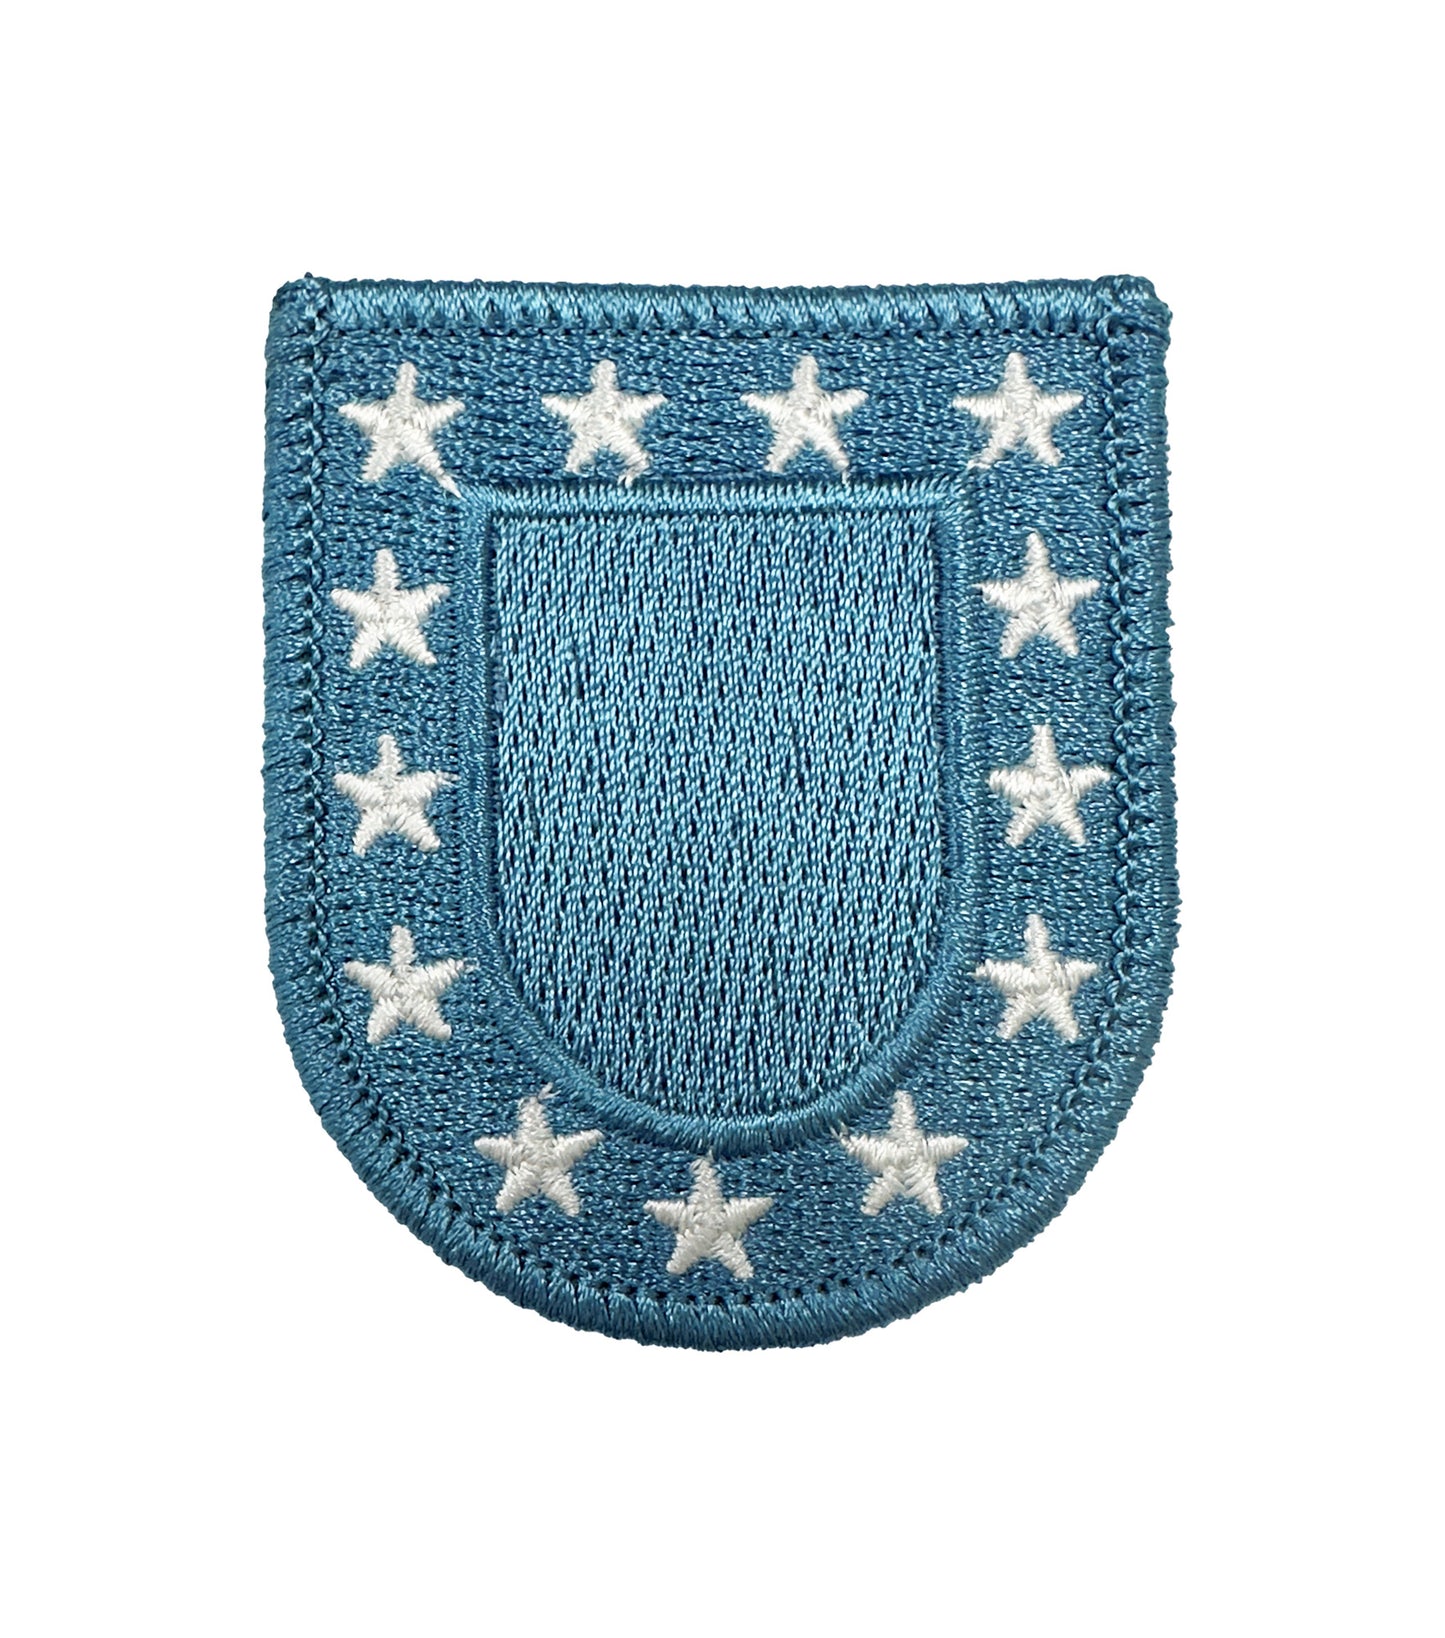 U.S. Army US Army Blue with White stars Flash